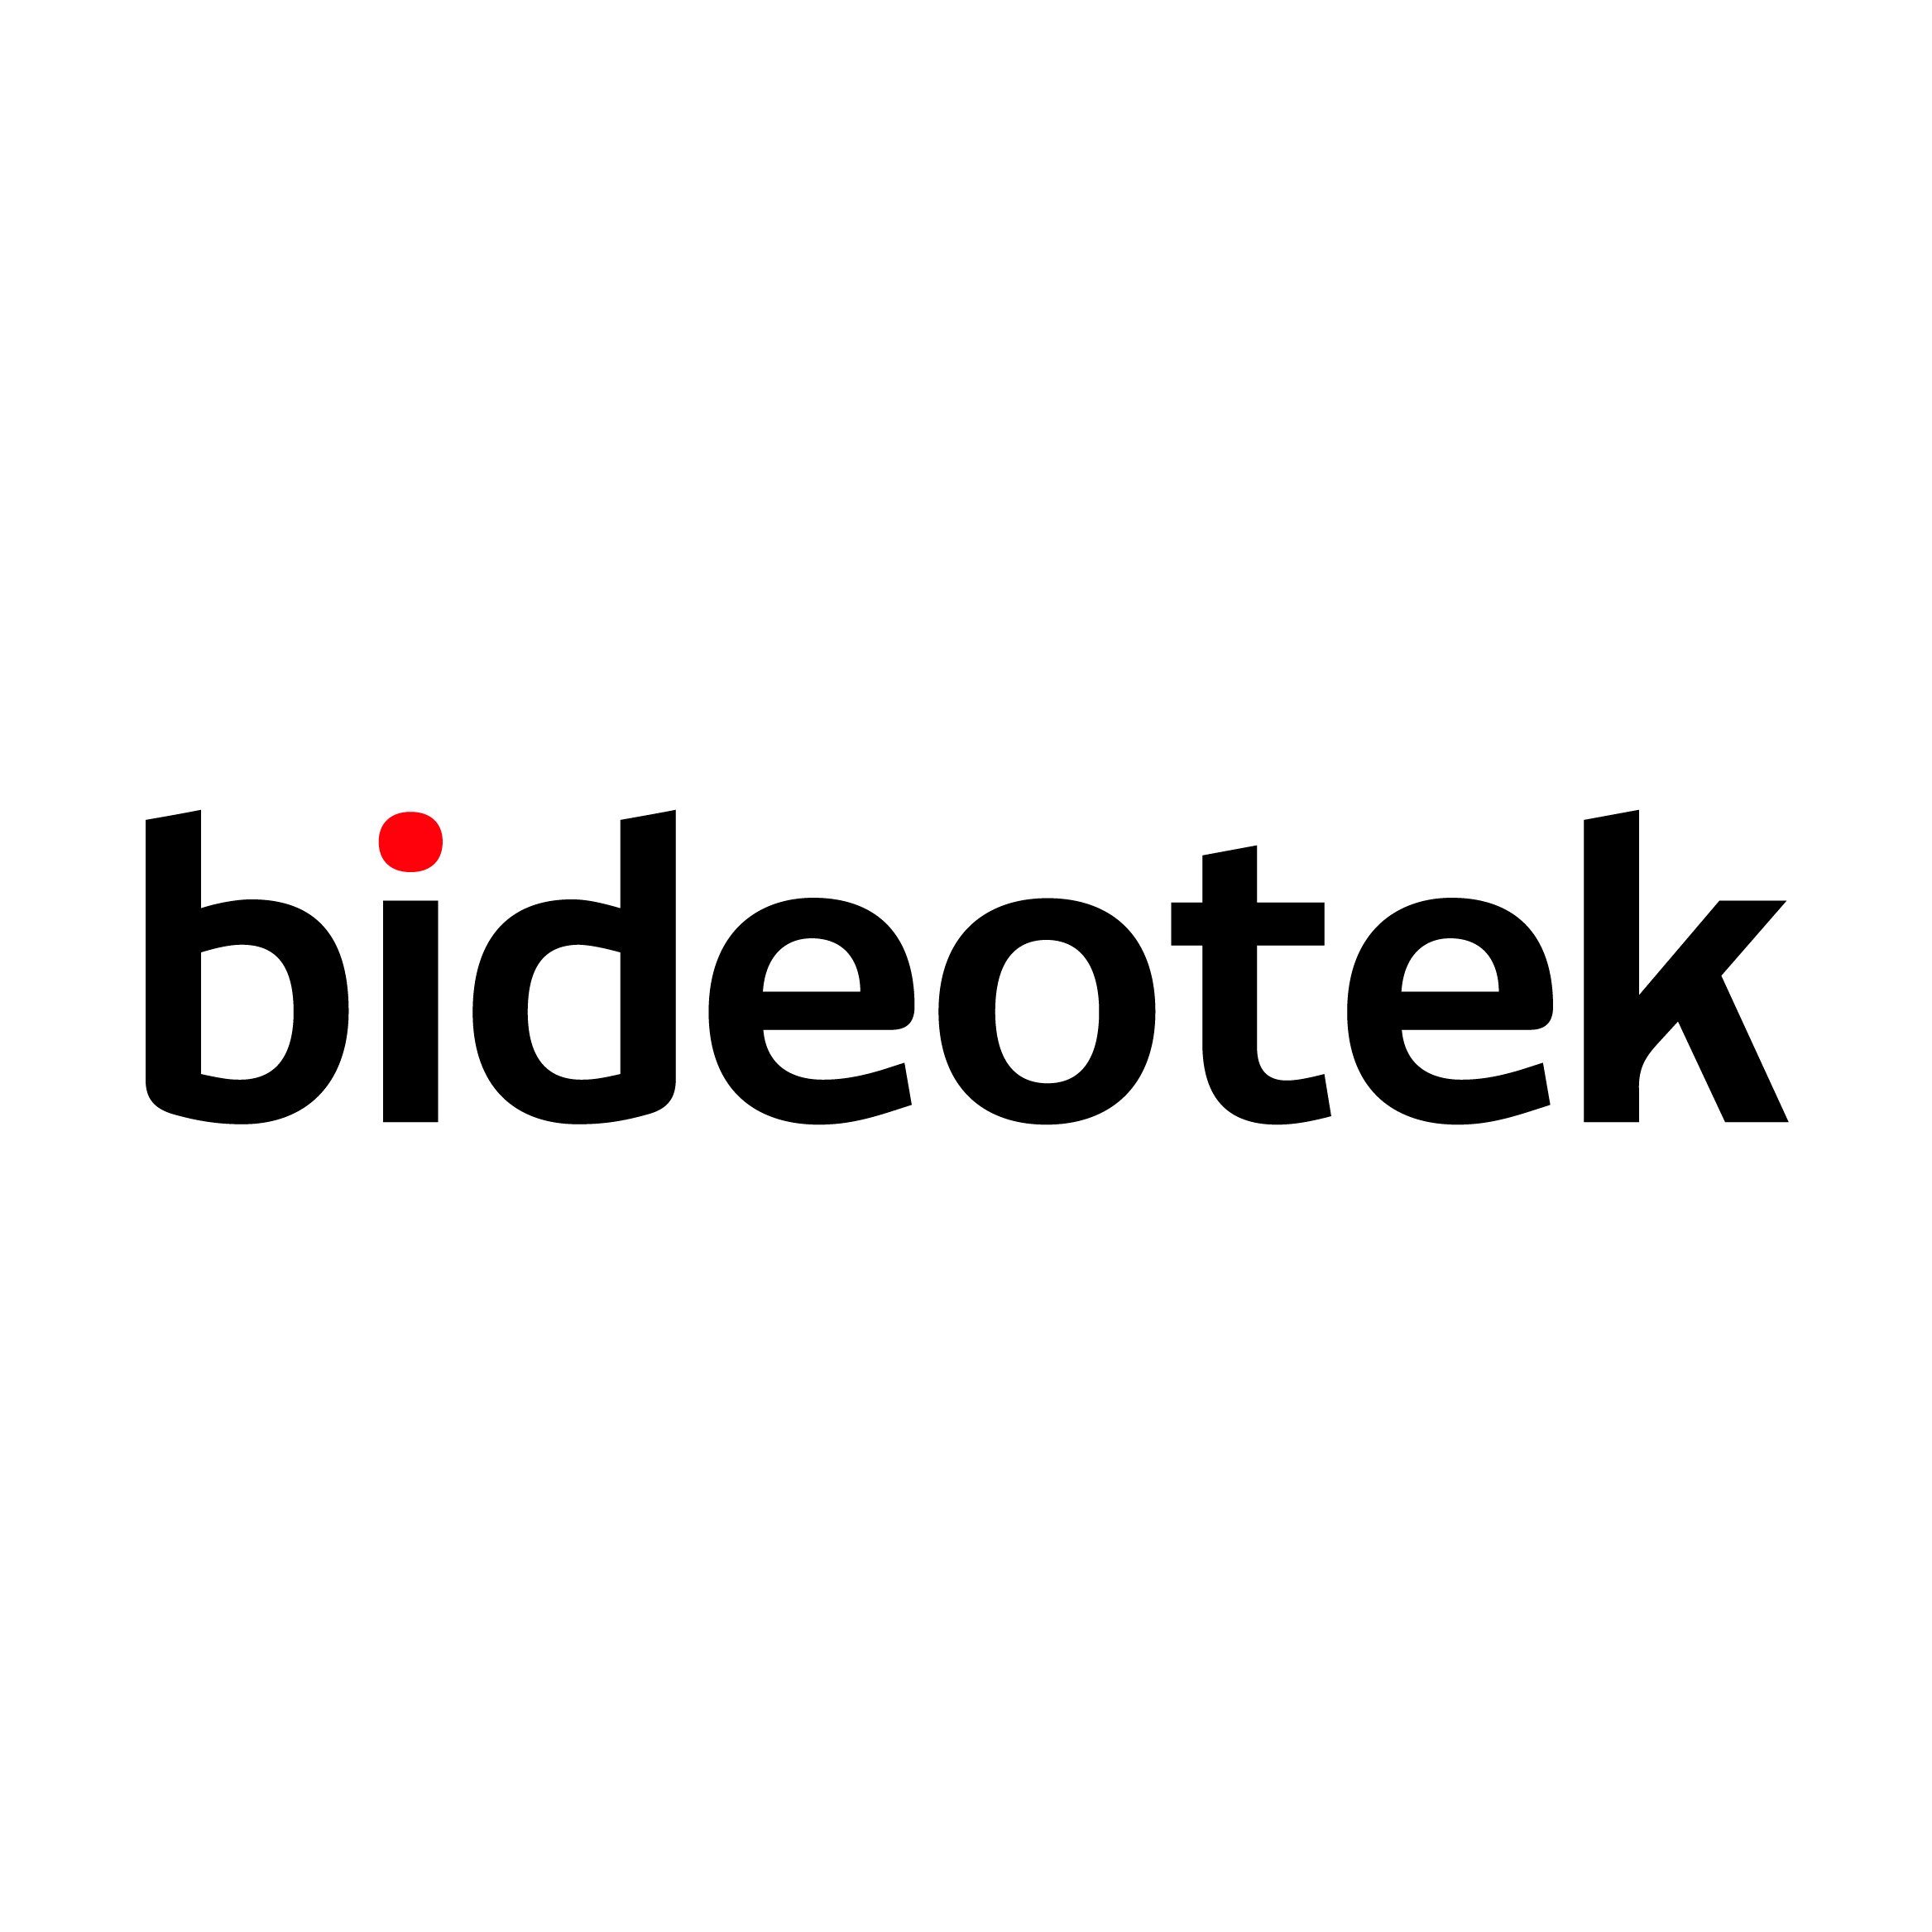 (c) Bideotek.com